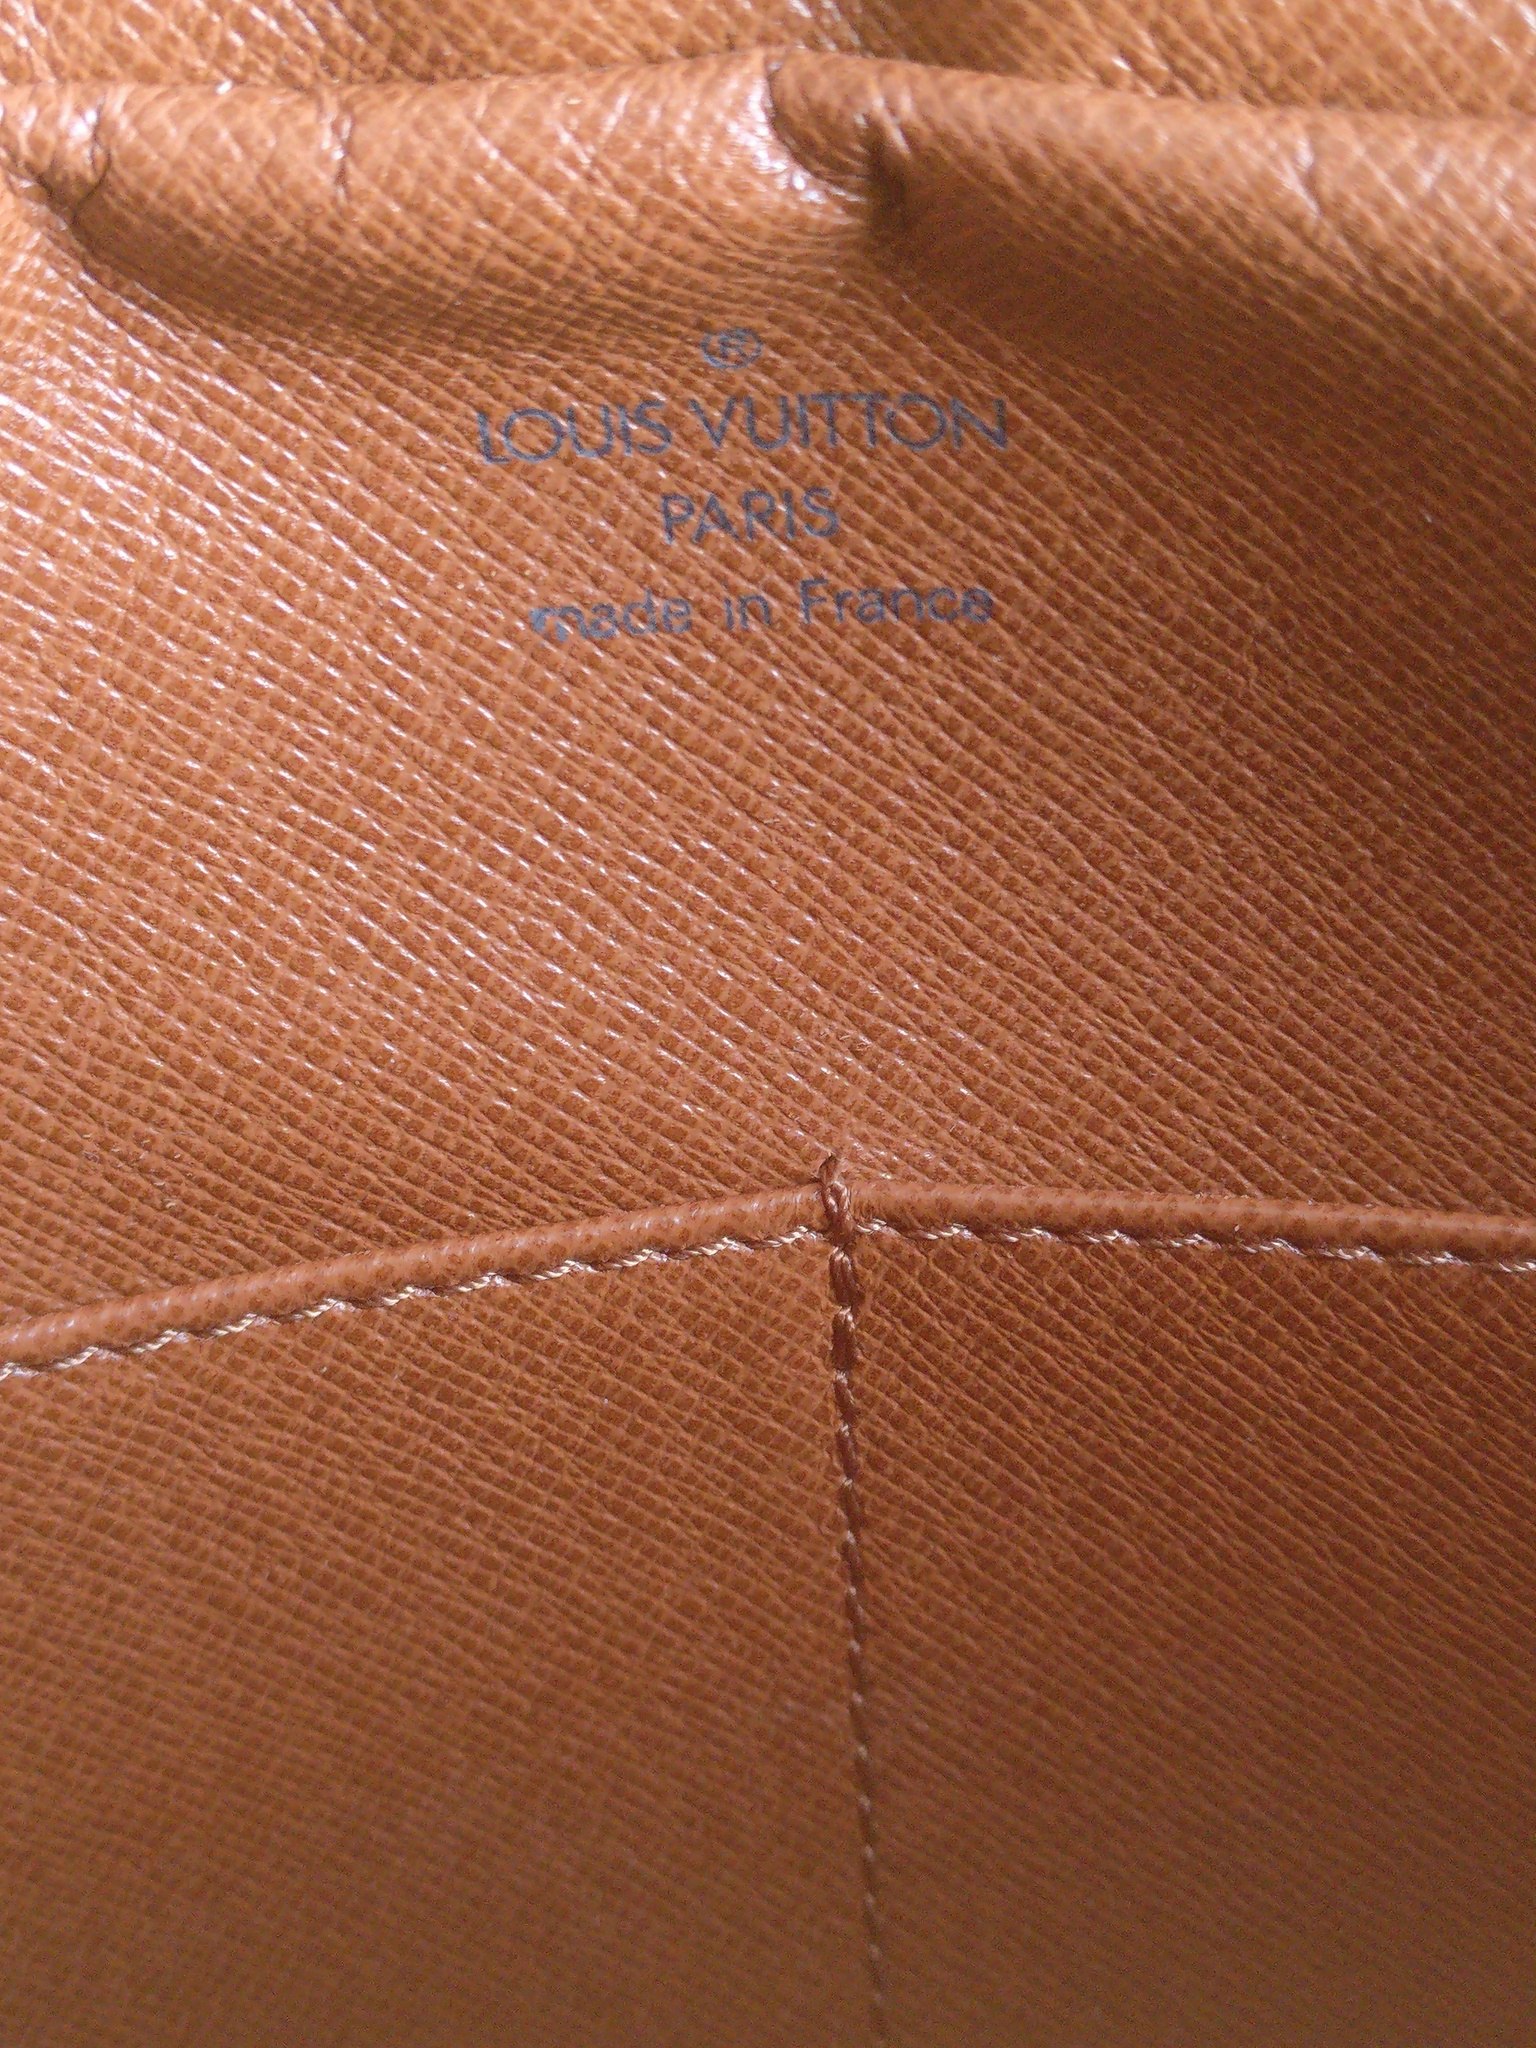 Louis Vuitton Compiegne 28 Pouch Authenticated By Lxr